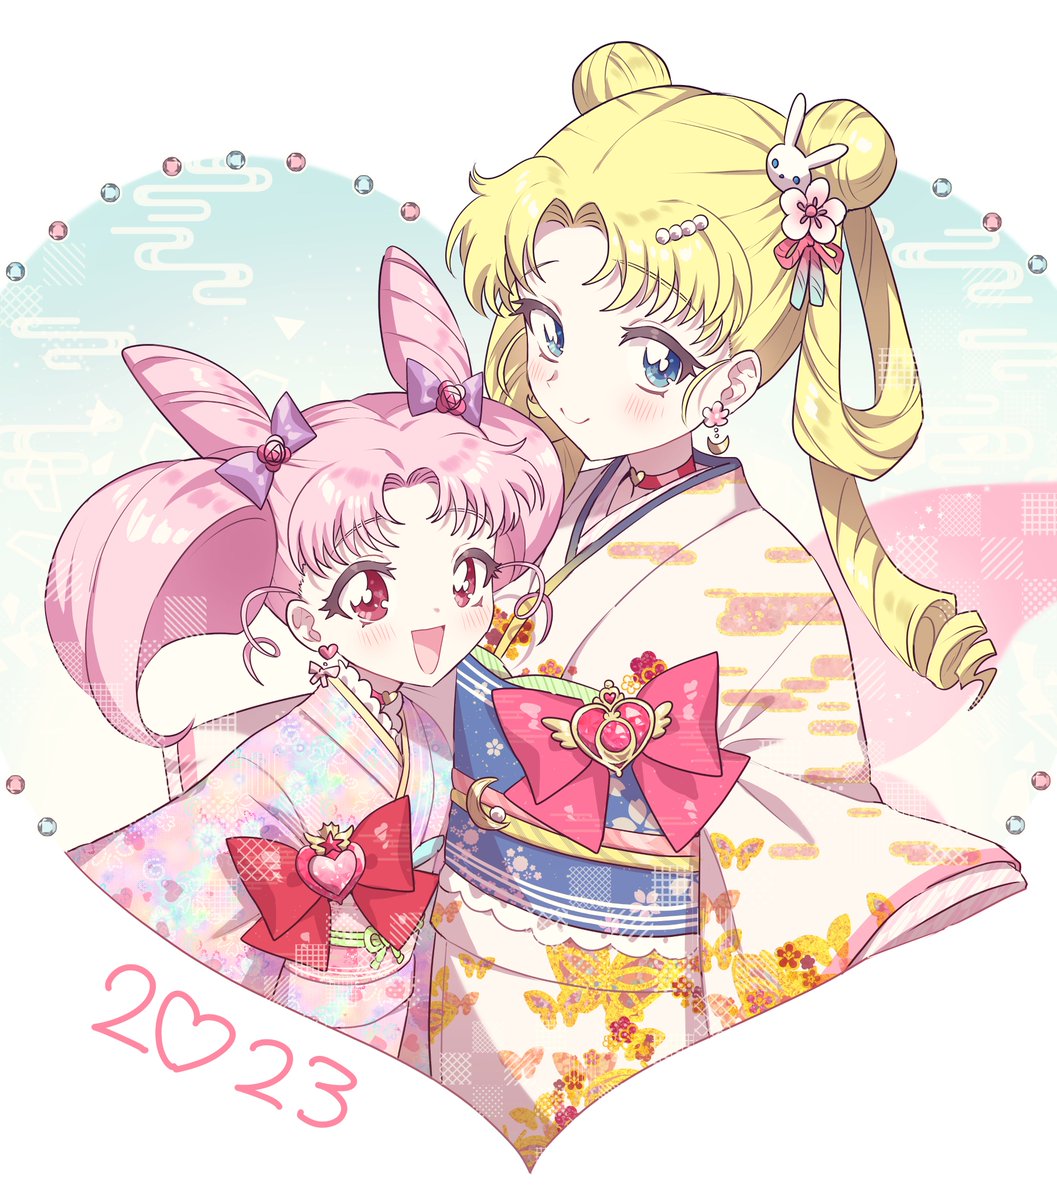 chibi usa ,tsukino usagi multiple girls cone hair bun 2girls kimono japanese clothes hair bun double bun  illustration images